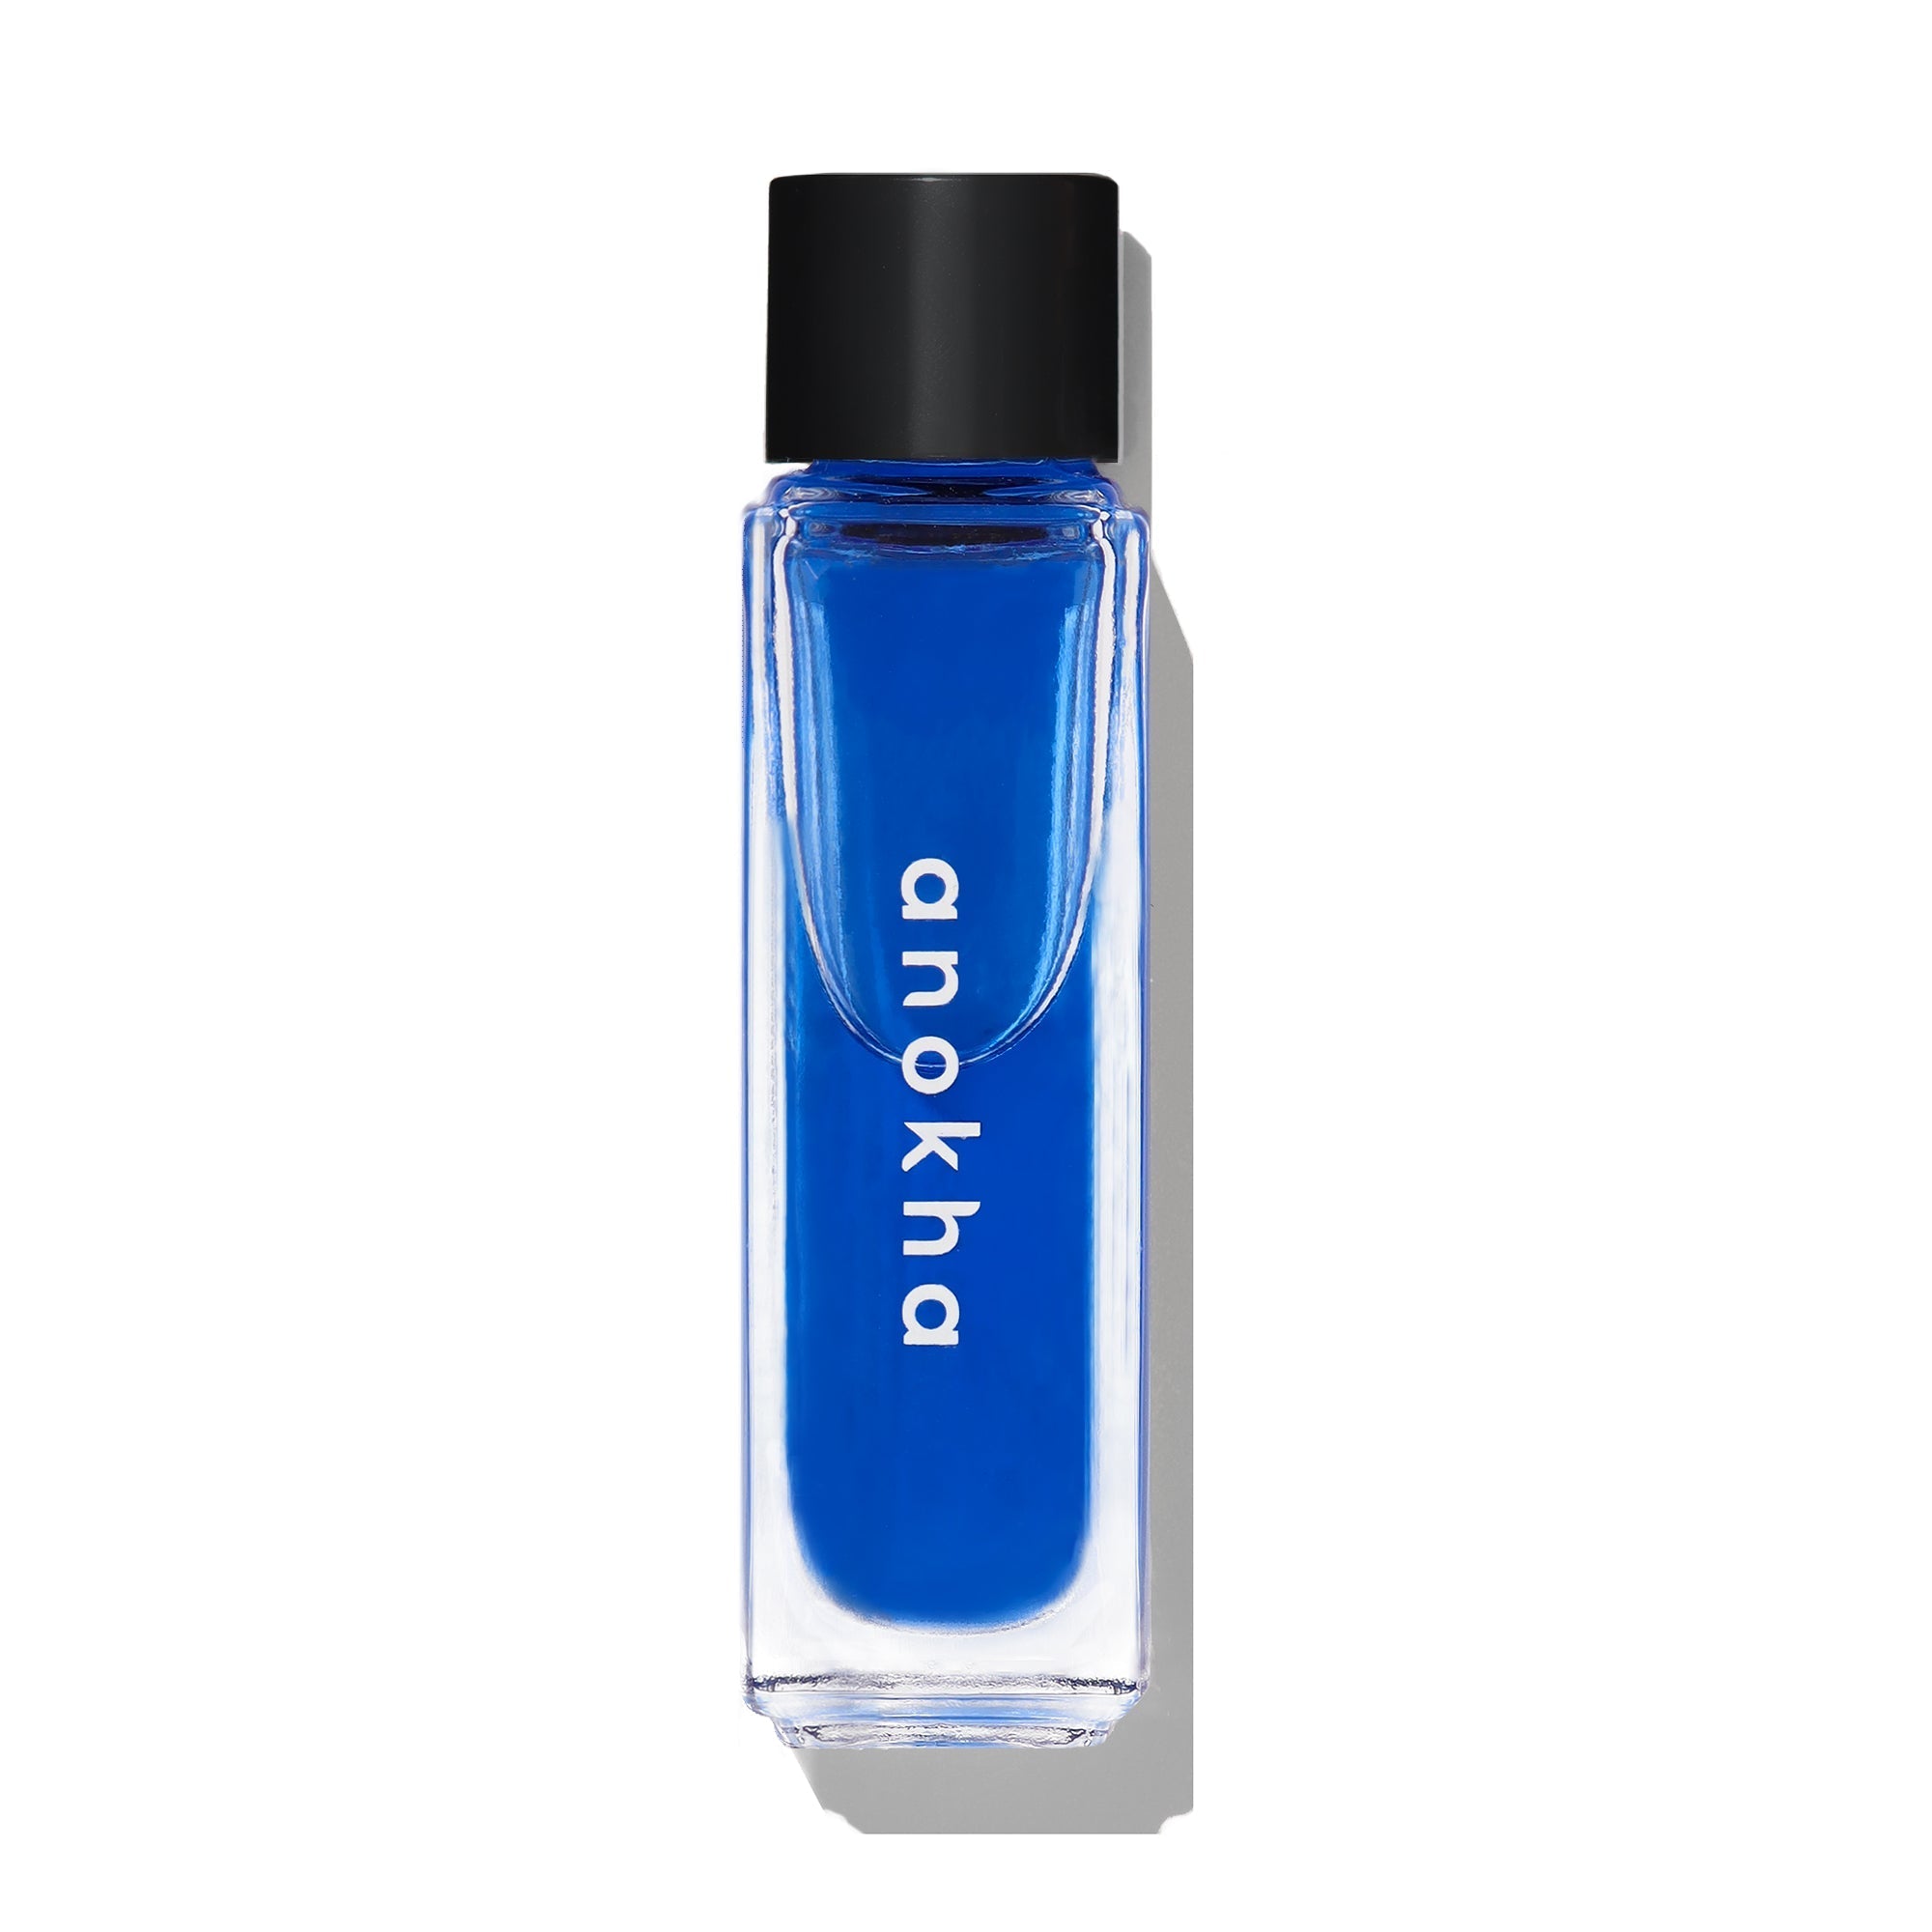 anokha skincare blue lotus body oil bottle 0.25 oz 7.5 ml